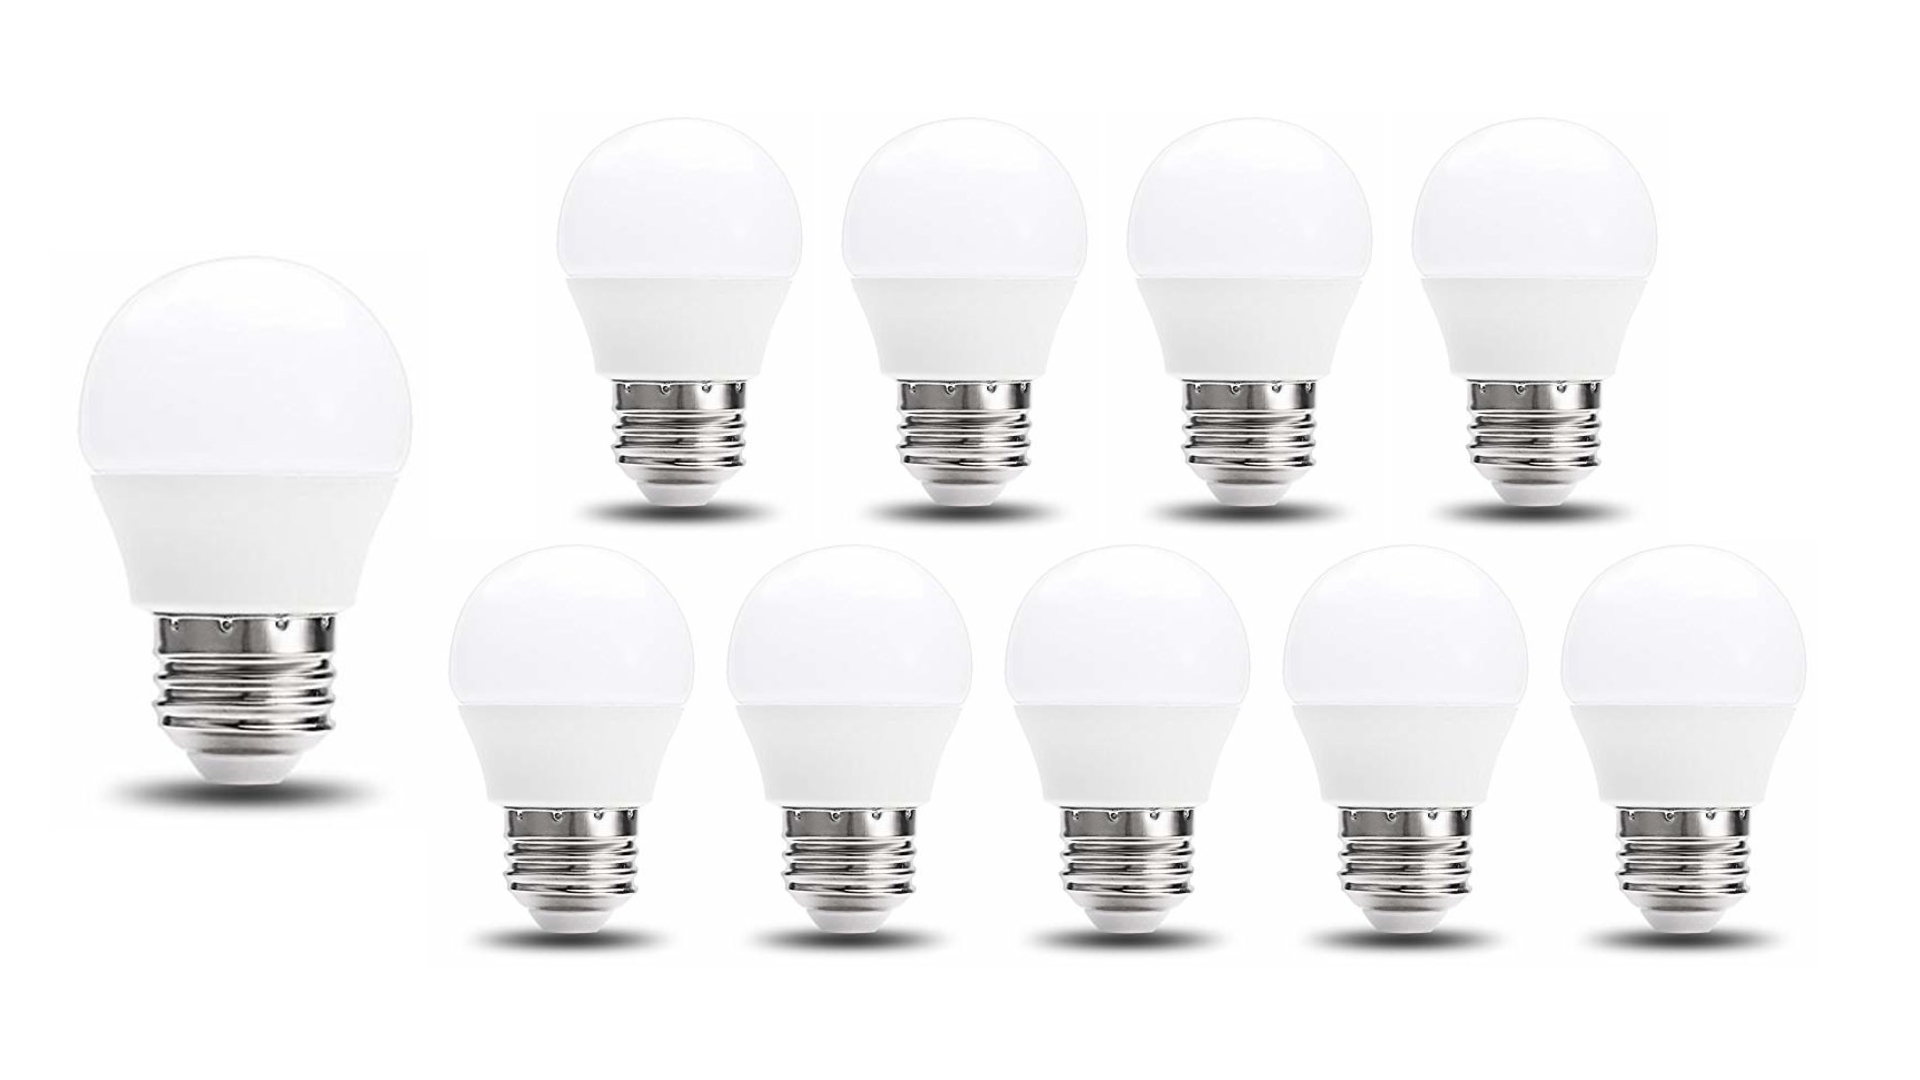 Kilauea Mountain verkiezen verachten Voordeelpak 10 stuks - E27 LED lamp - 6W vervangt 48W - G45 -  Ledlichtdiscounter.nl